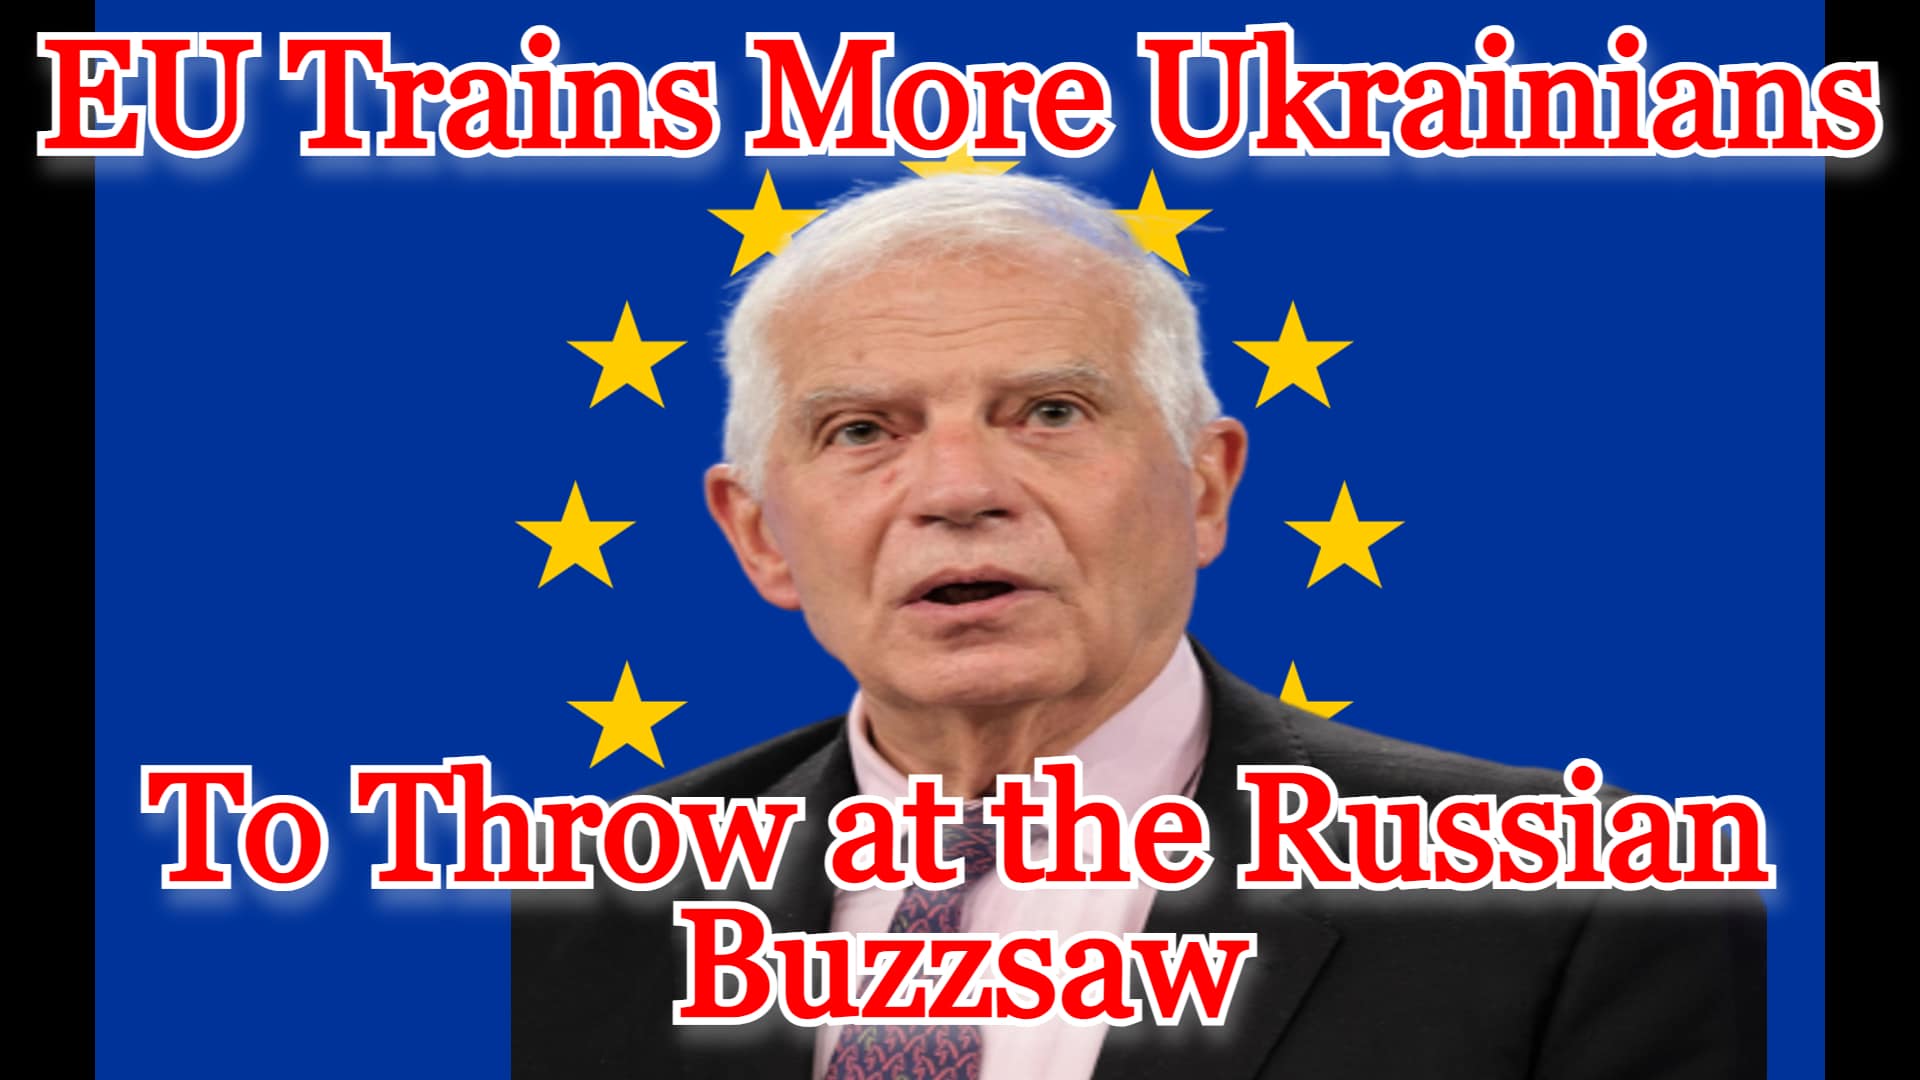 COI #467: EU to Train More Ukrainians to Throw at the Russian Buzzsaw